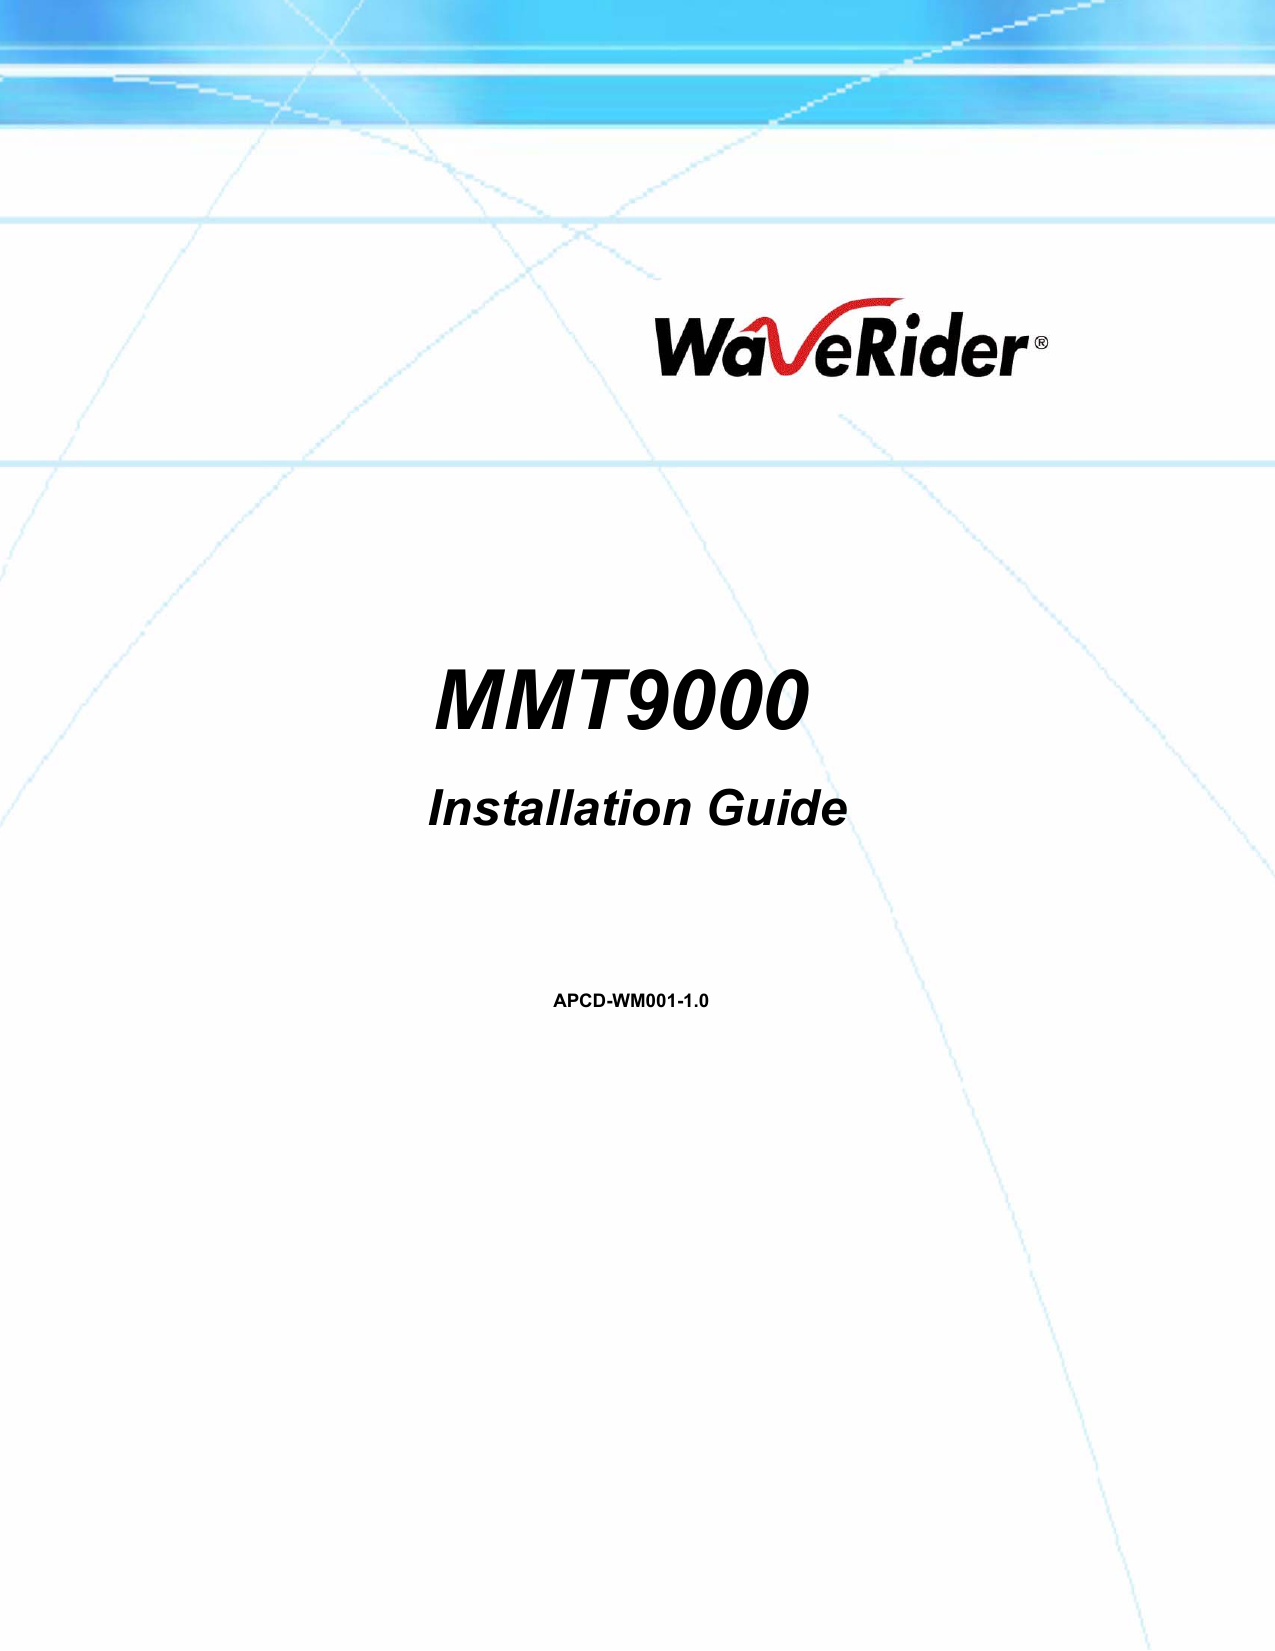                                                                                                                                                                                                                                                                                                                                                                                                                                                                                                                                                                                                                                                                                                                                                                                                                                                                                                                                                                                                                                                                                                                                                                                                                                                                                                                                                                                                                                                                                                                                                                                                                                                                                                                                                                                                                                                                                                                                                                                                                                                                                                                                                                                                                                                                                                                                                                                                                                                                                                                                                                                                                                                                                                                                                                                                                                                                                                                                                                                                                                                                                                   MMT9000 Installation GuideAPCD-WM001-1.0